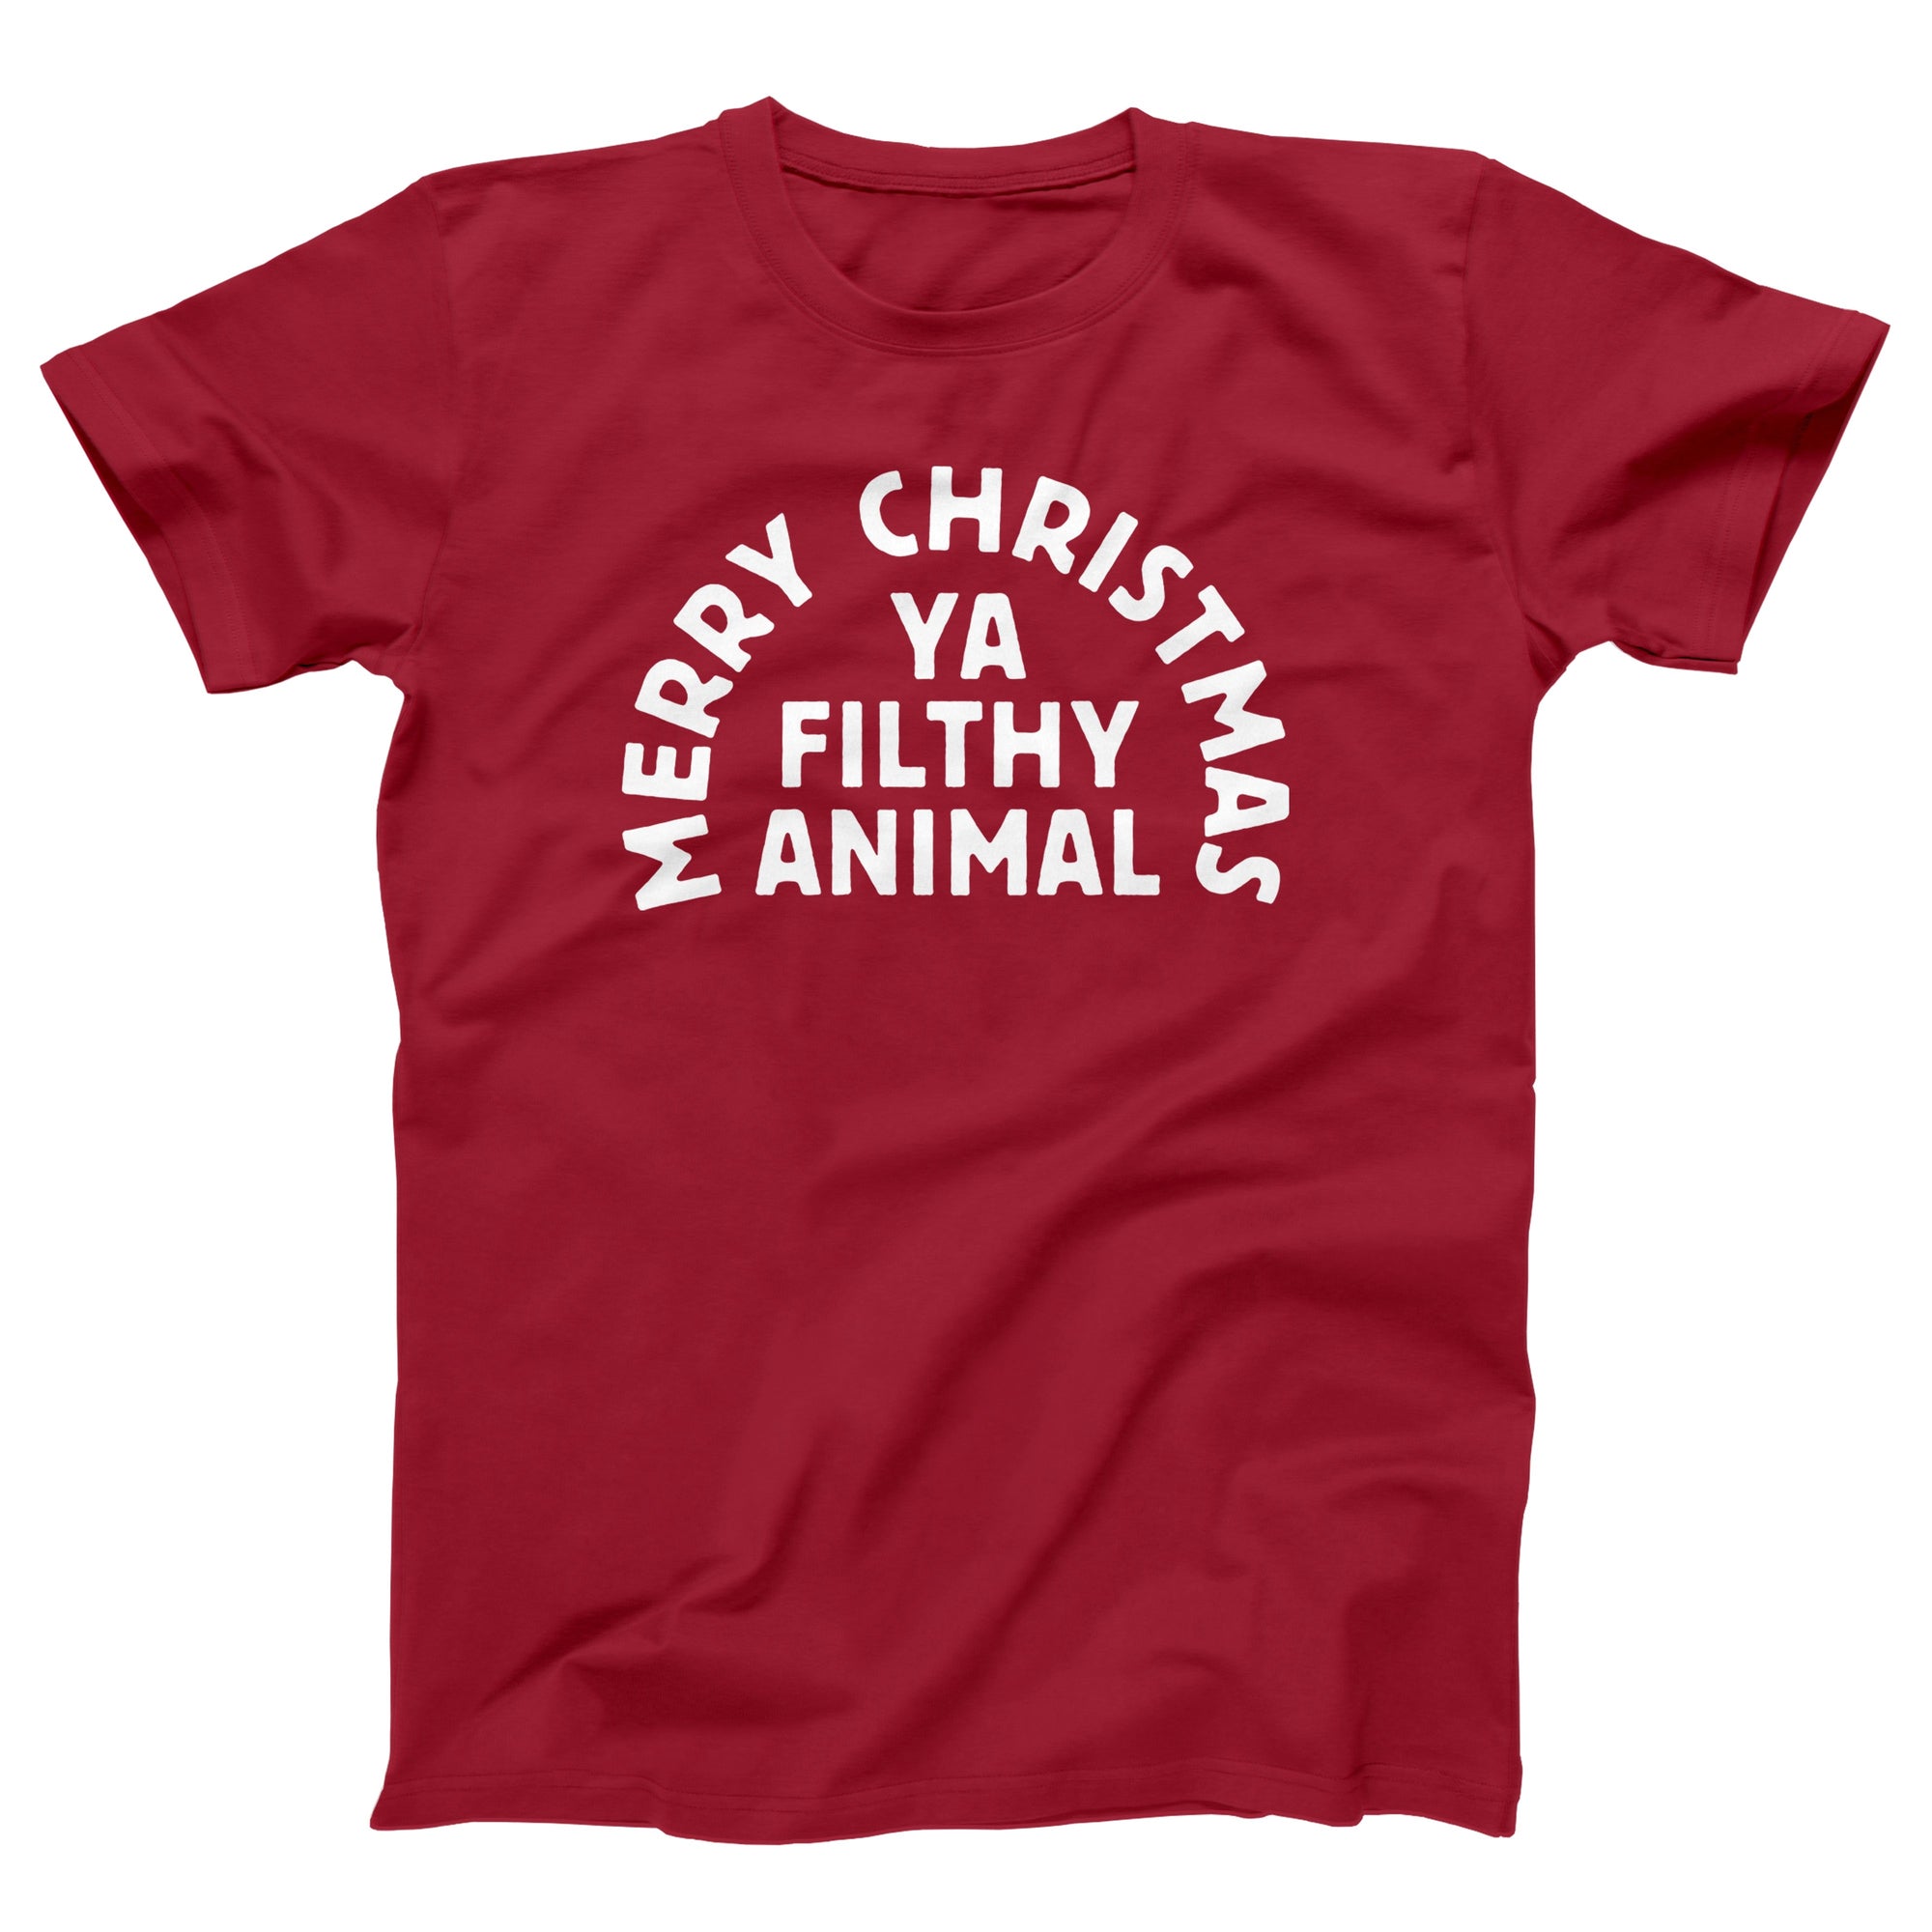 Merry Christmas Ya Filthy Animal Adult Unisex T-Shirt - anishphilip